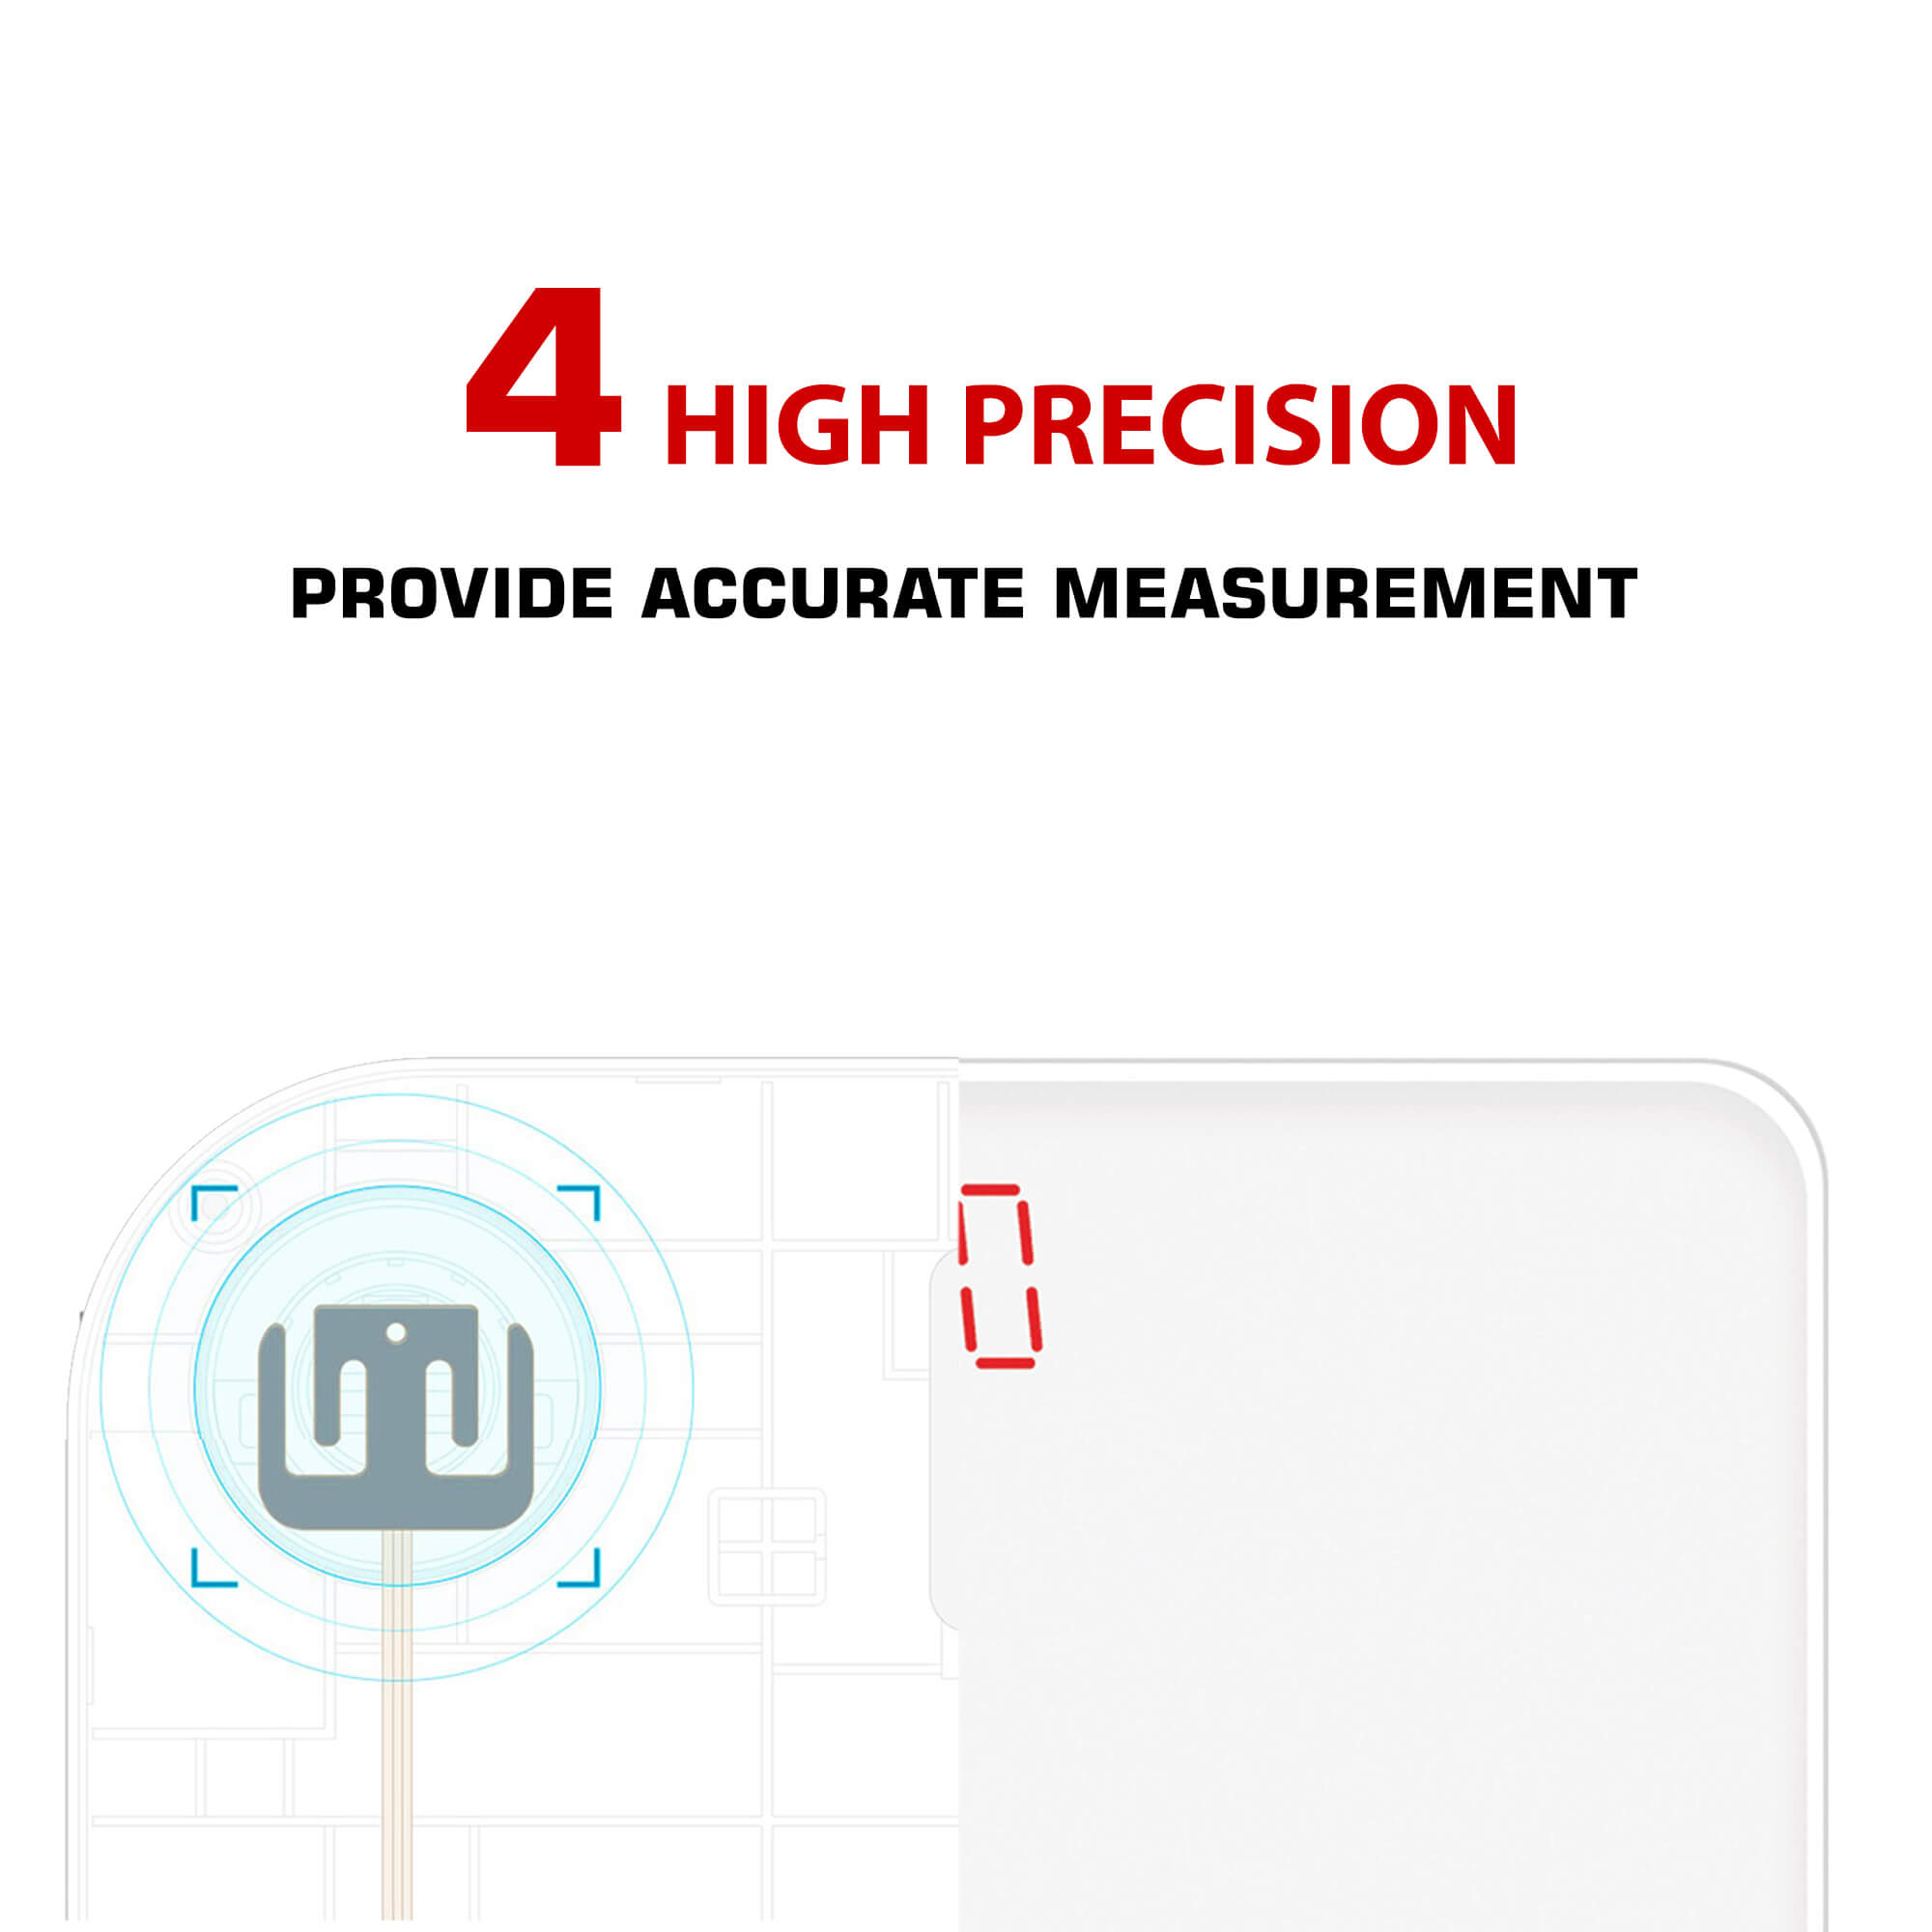 PowerMax Fitness BSD-5 Digital Personal Bathroom Body Weight Scale